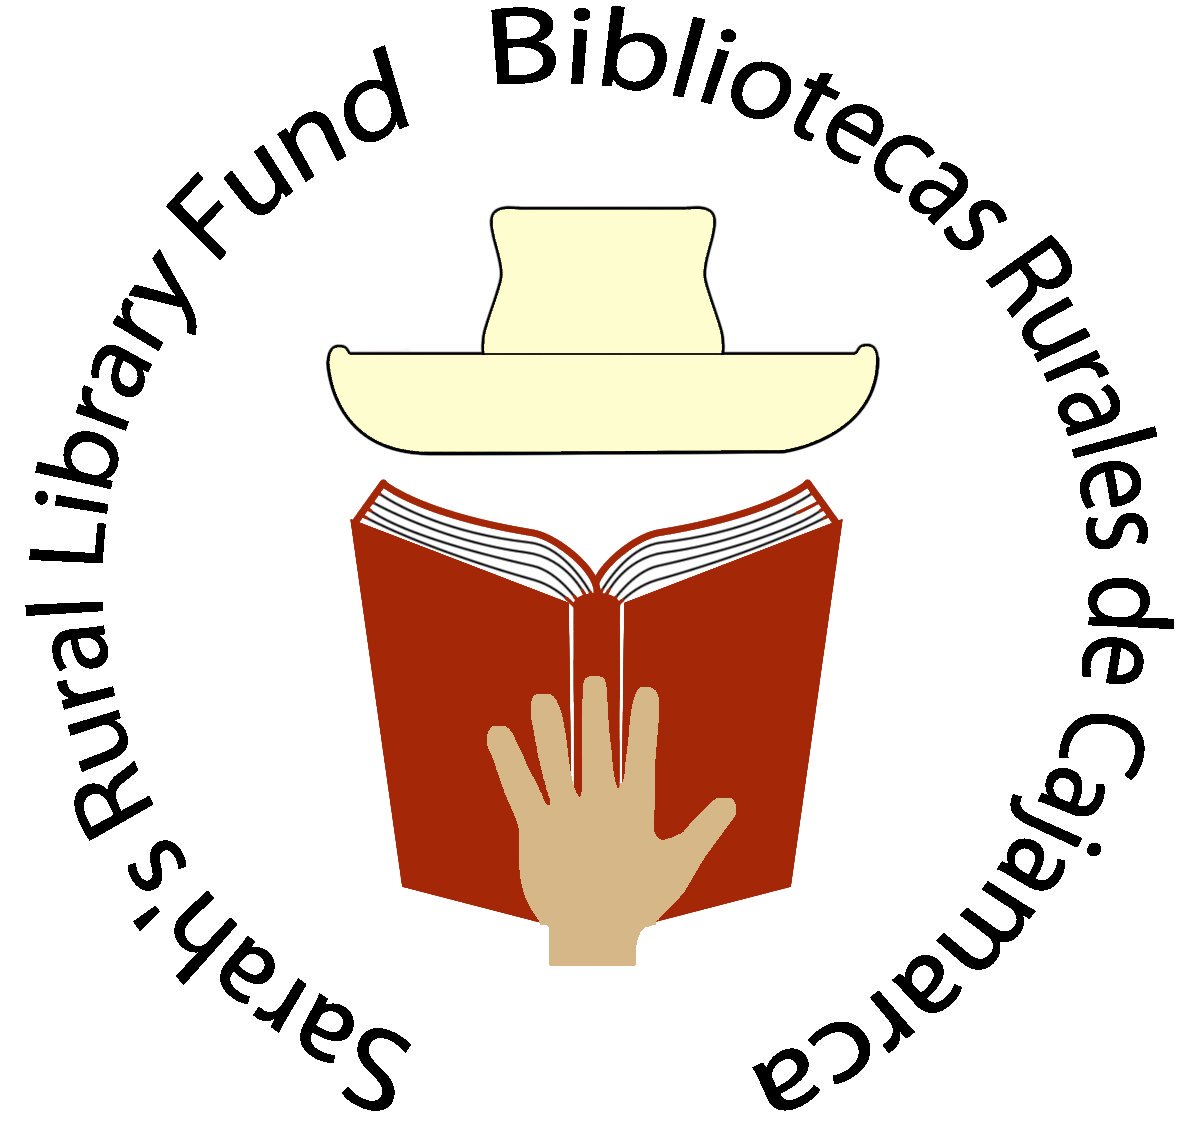 Sarah's Rural Library Fund